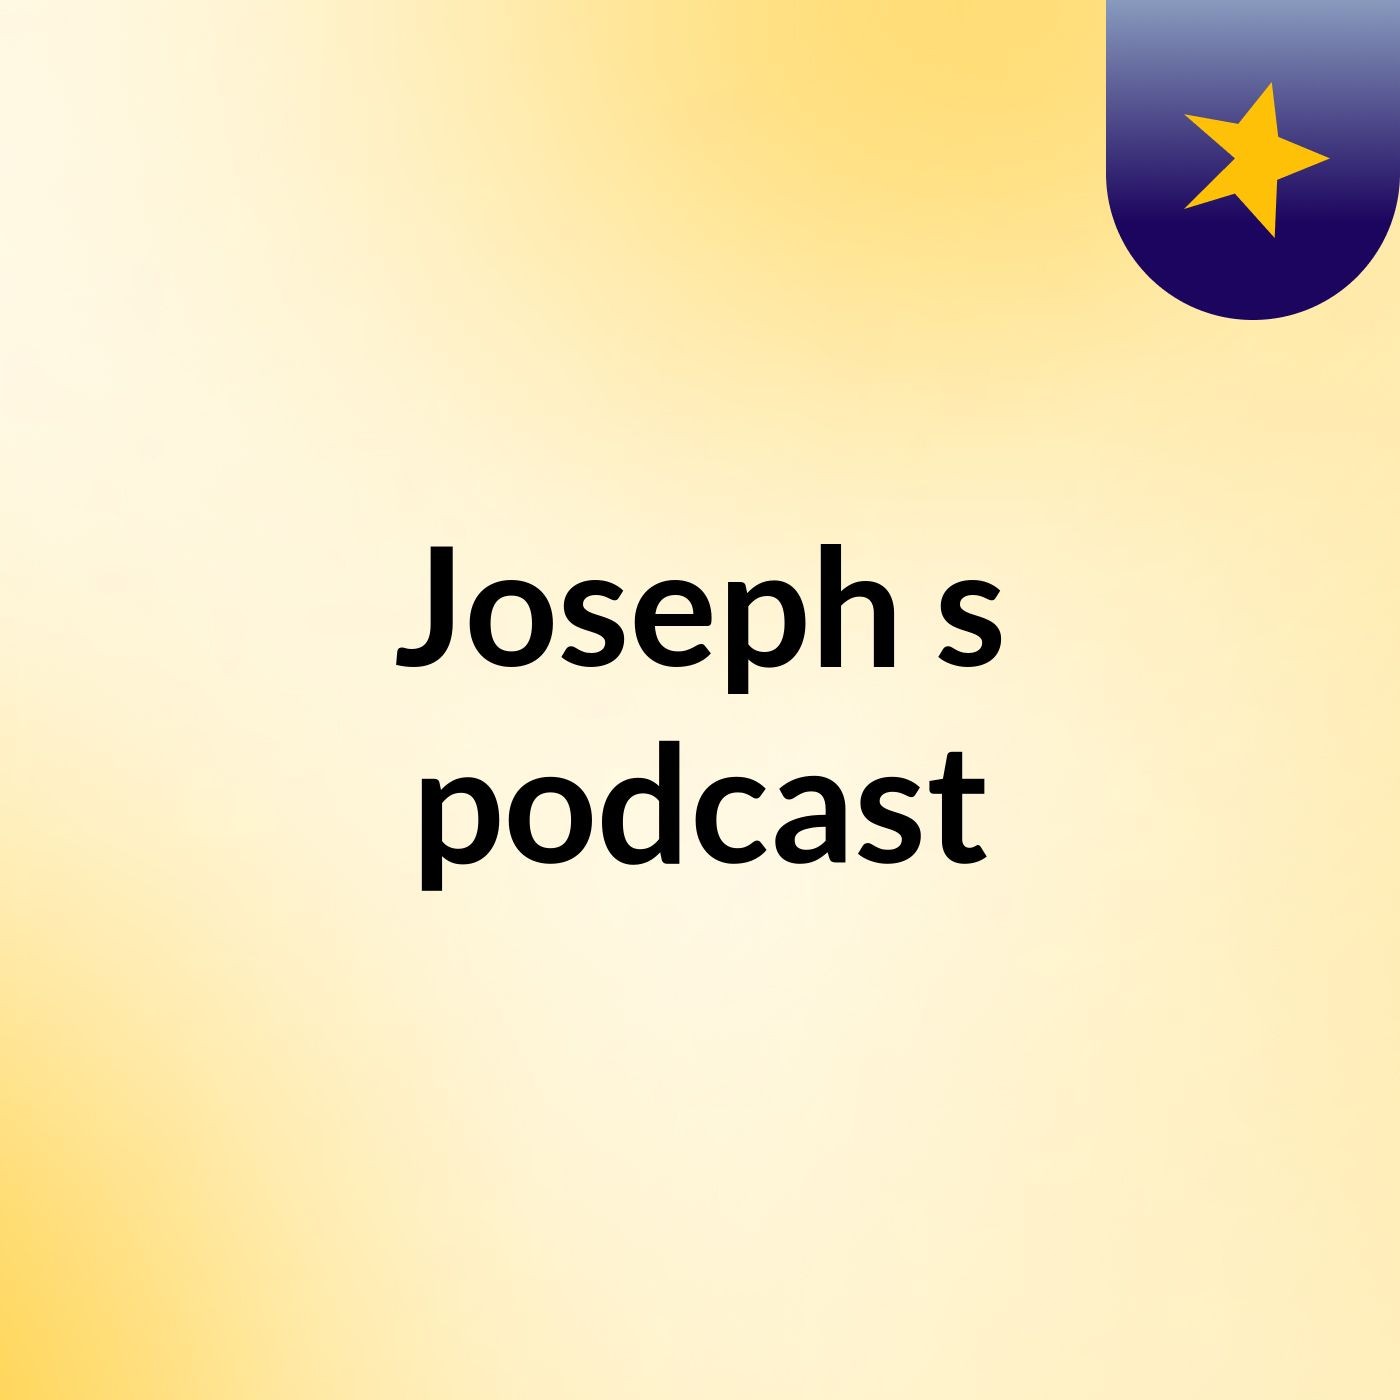 Joseph's podcast